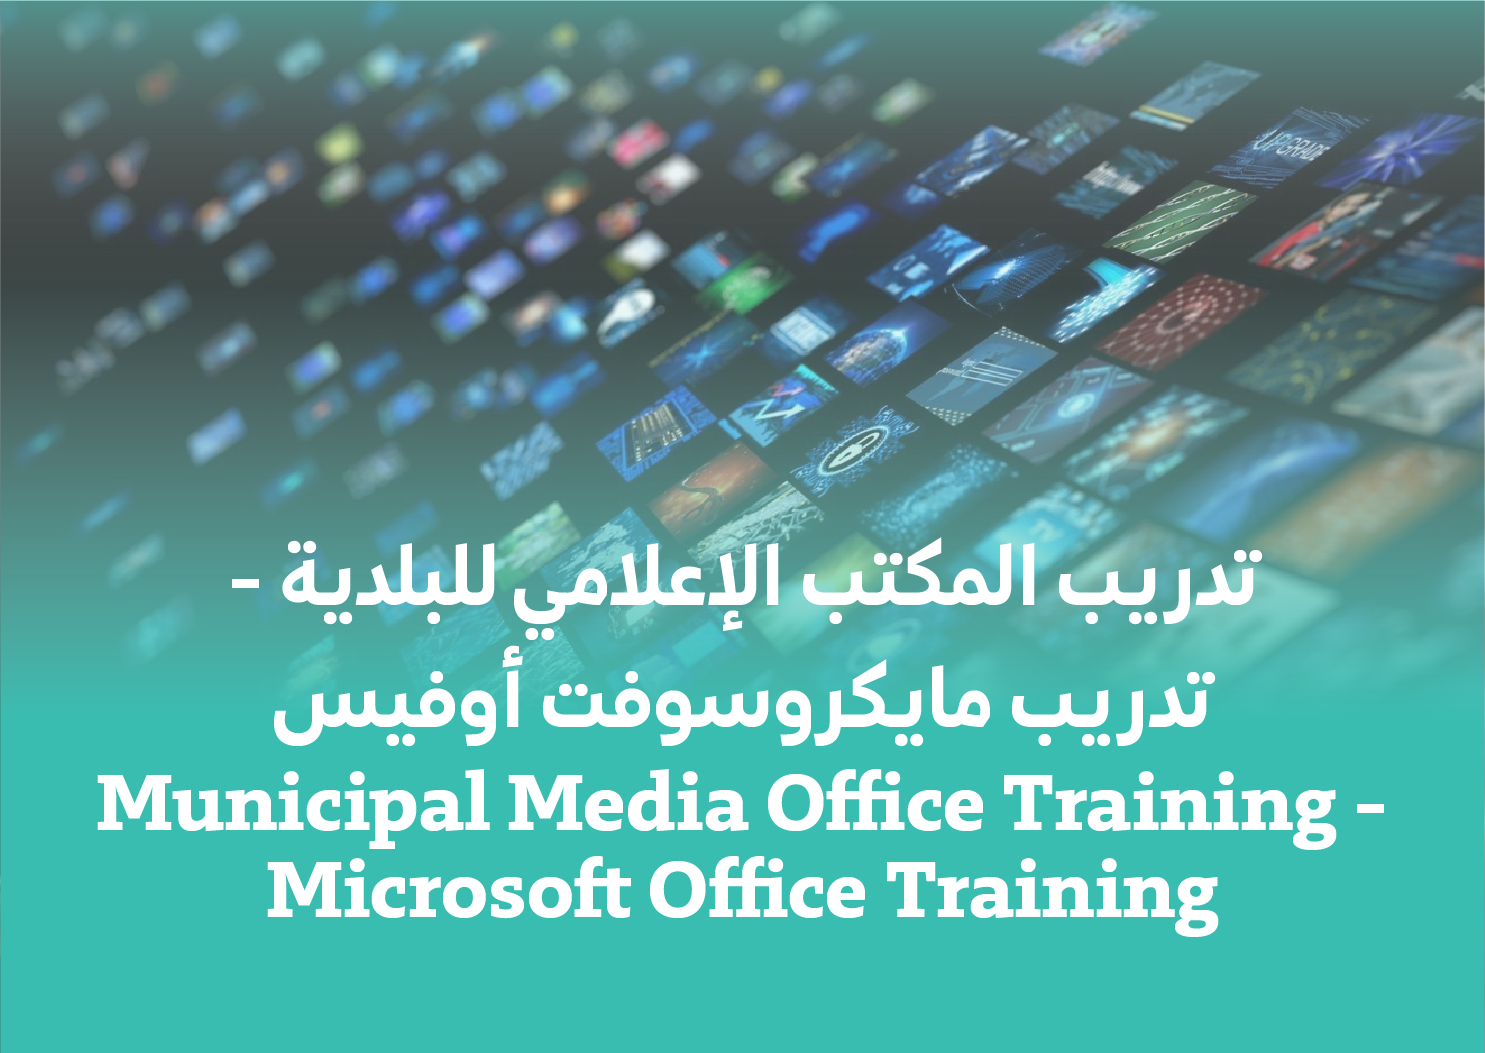 Municipal Media Office Training - Microsoft Office Training